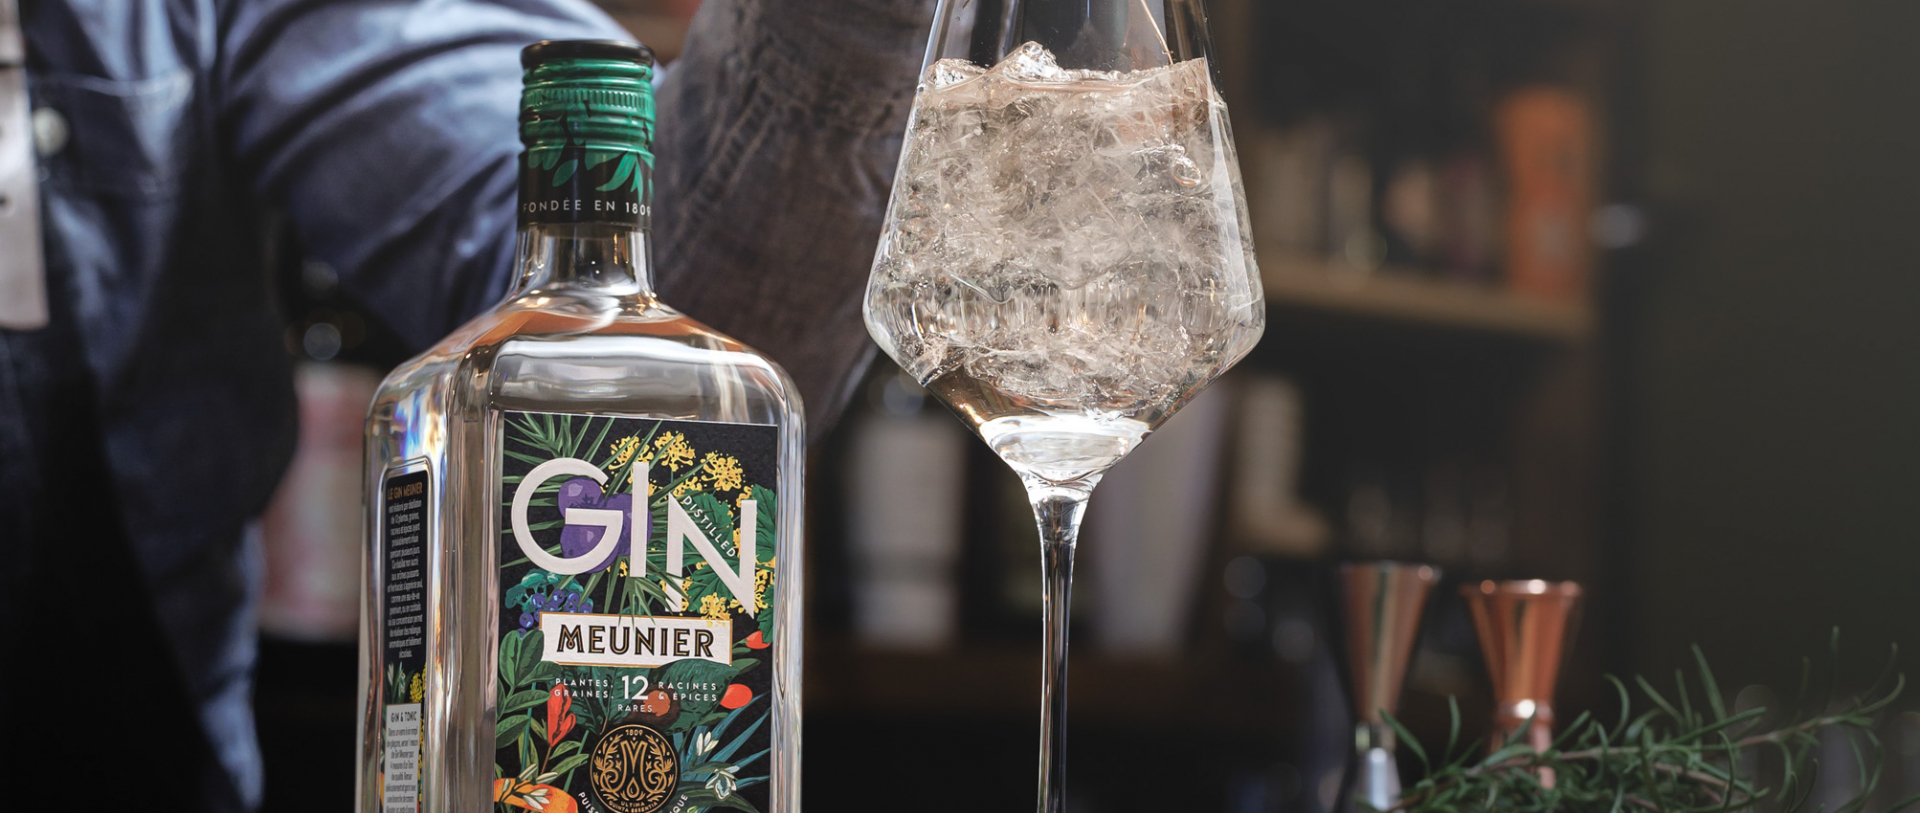 GIN & TONIC  Meunier : distillerie artisanale de génépi, gin et